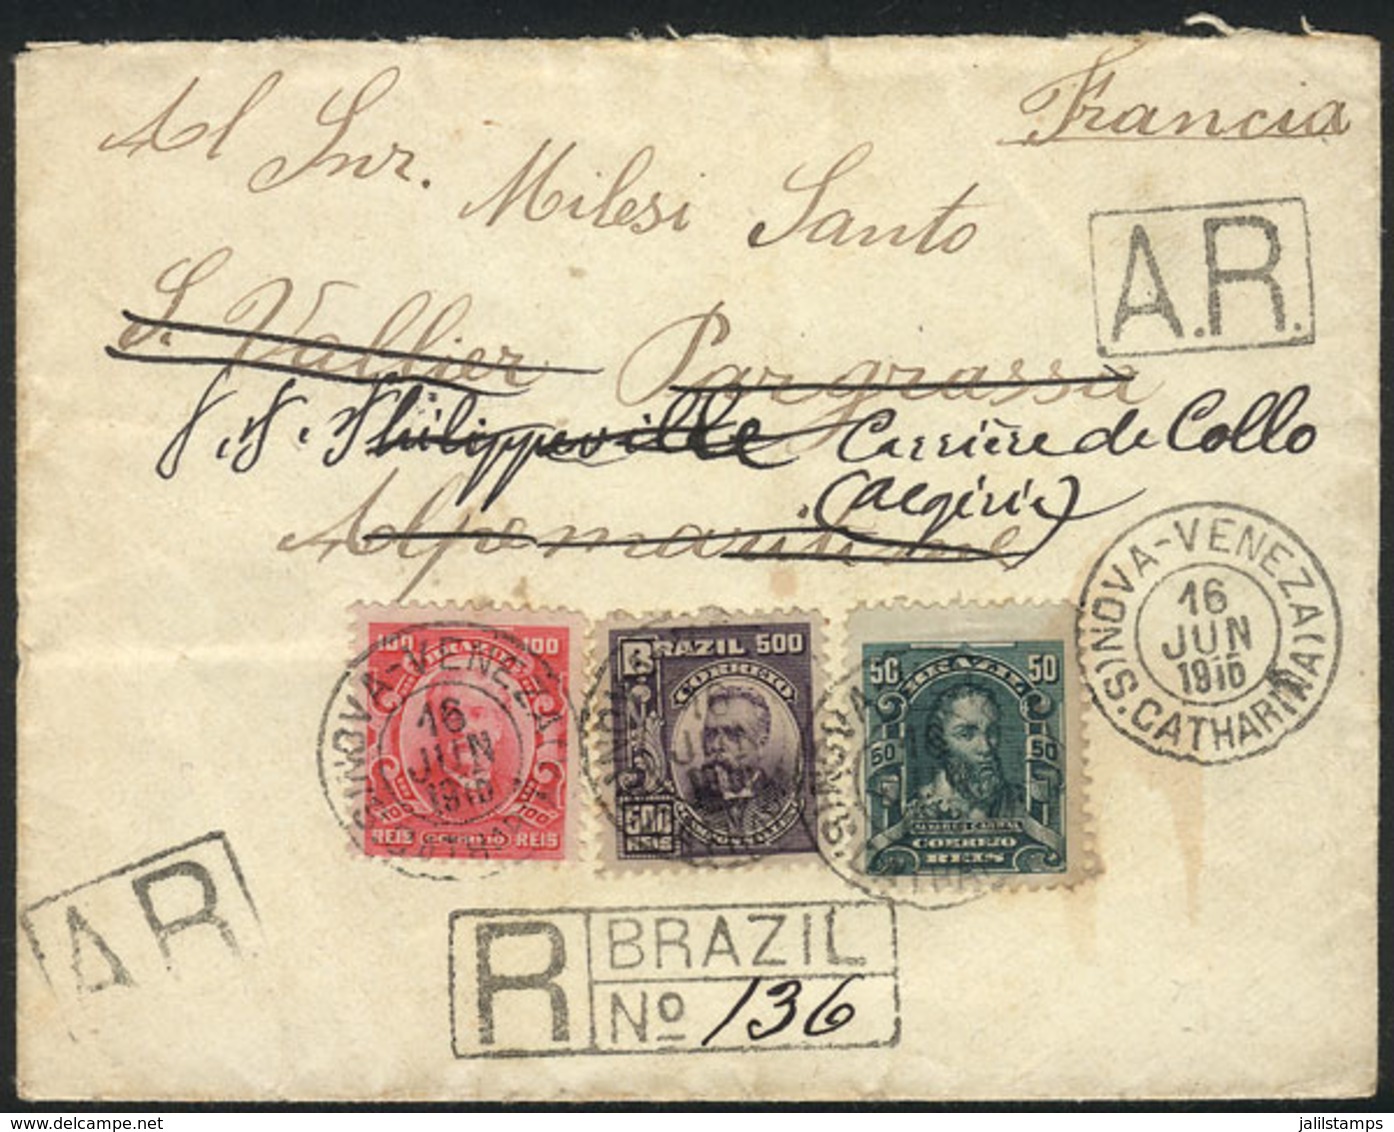 BRAZIL: Registered Cover With AR Sent From NOVA-VENEZA To France On 16/JUN/1910, Franked With 650Rs., VF! - Préphilatélie